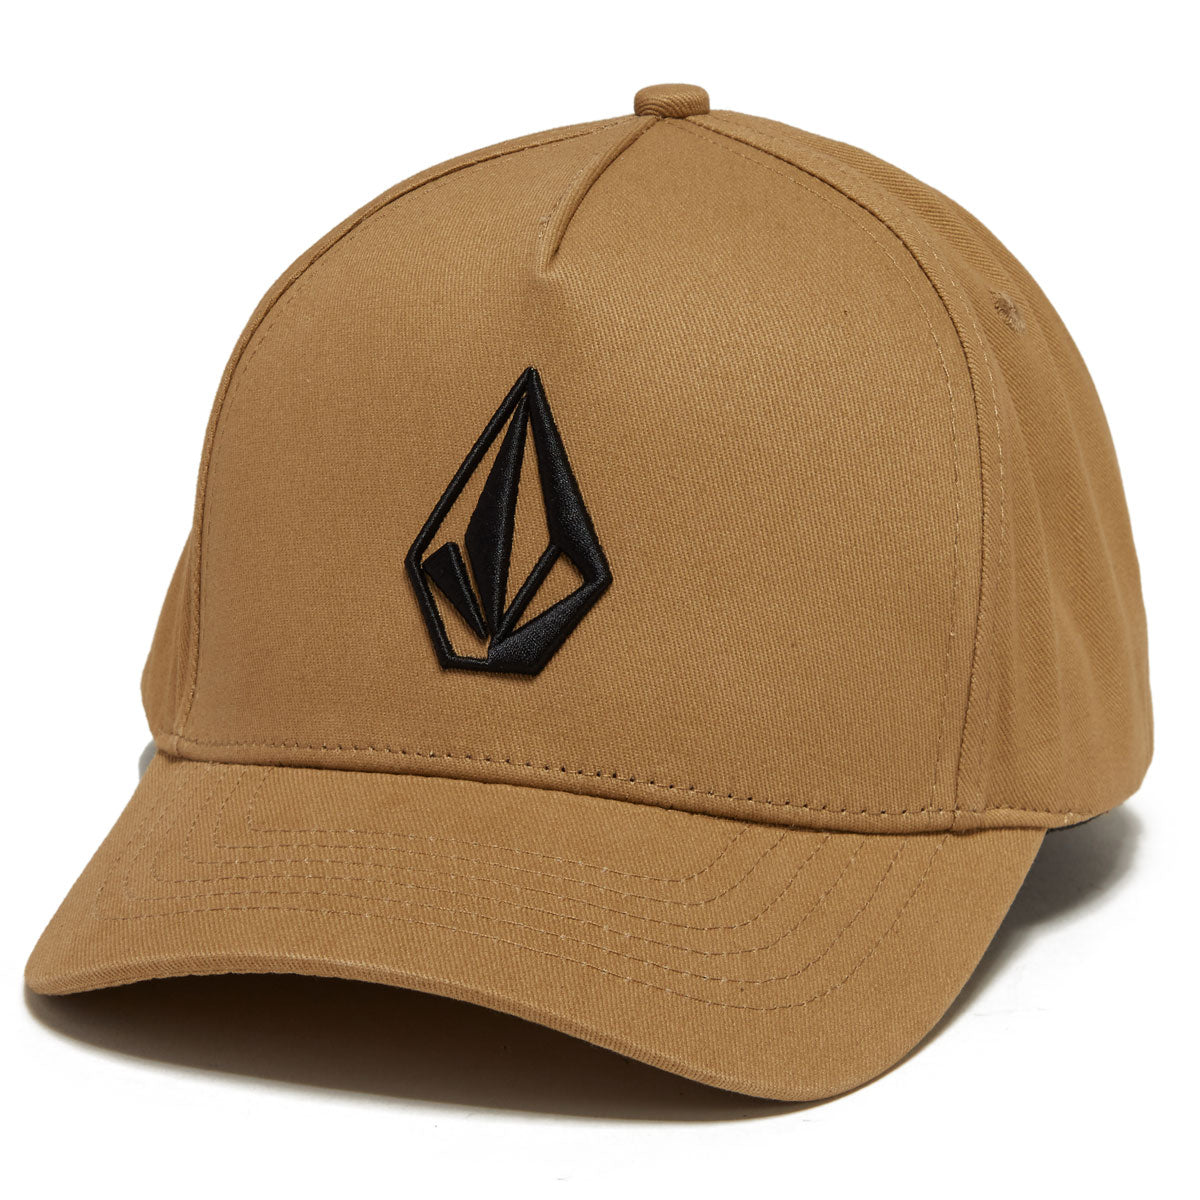 Volcom Embossed Stone Adjustable Hat - Dark Khaki image 1